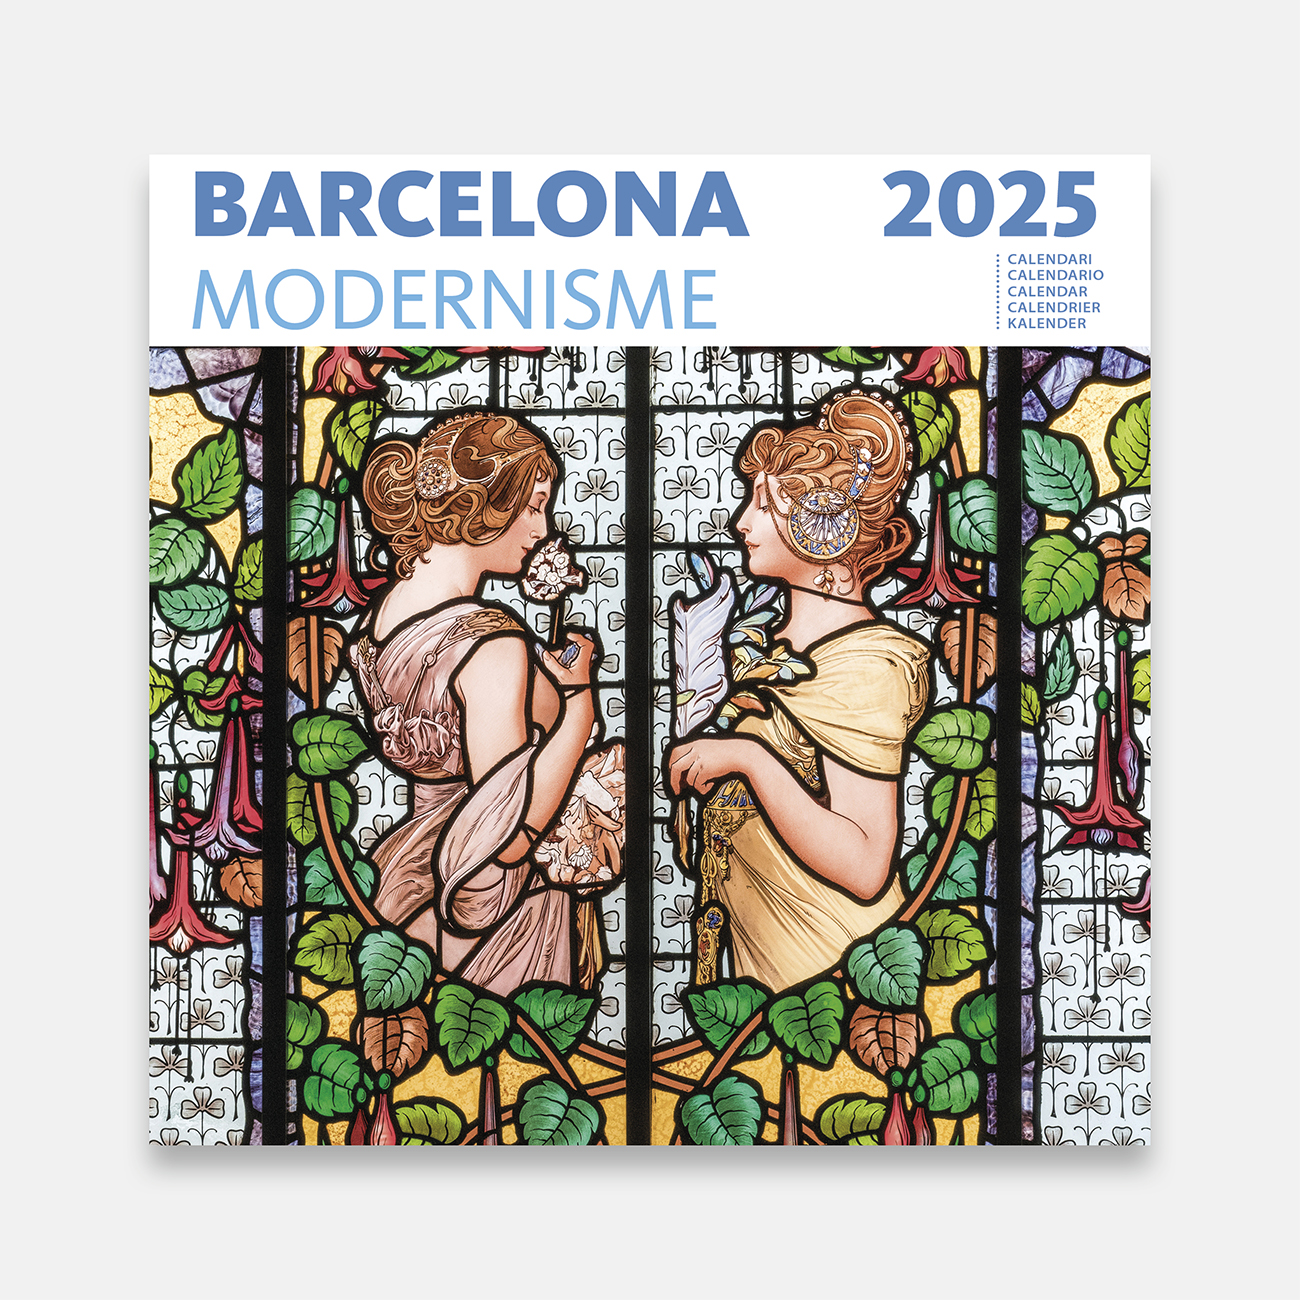 Calendrier 2025 Barcelone dans le modernisme 25mod calendario pared 2025 modernisme barcelona